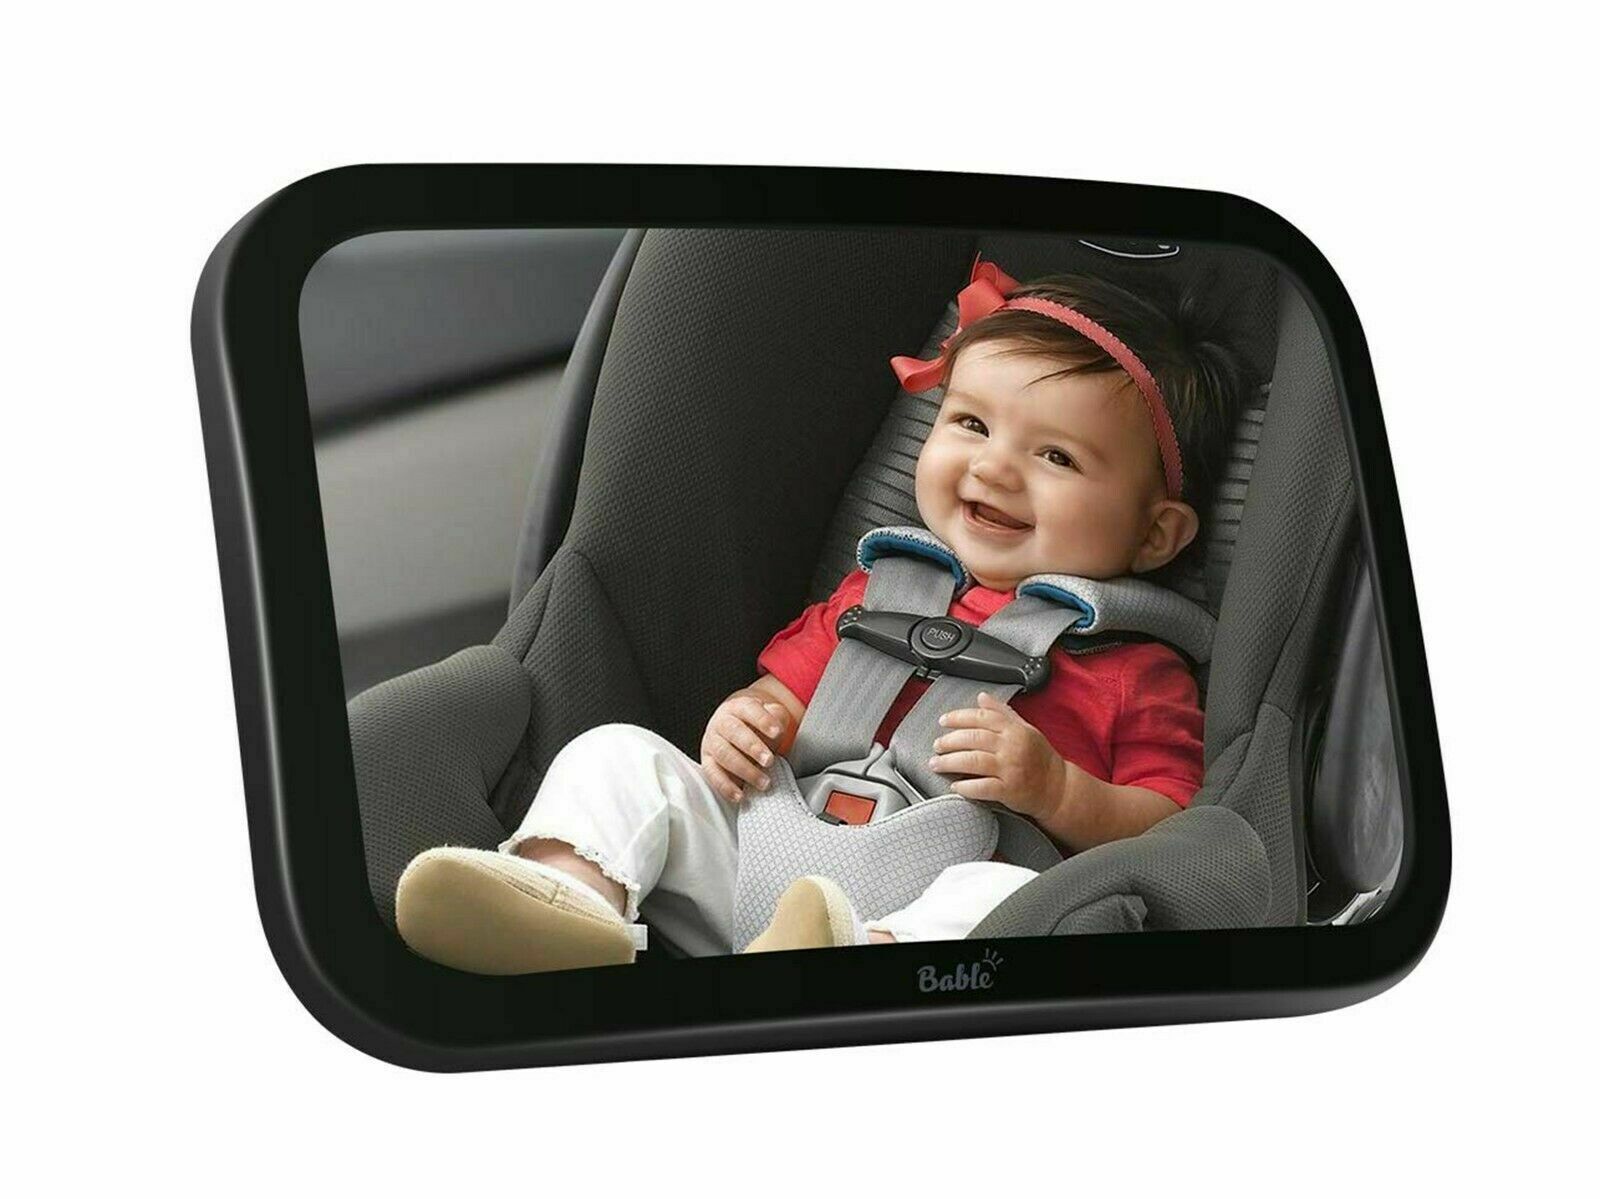 Auto Rücksitzspiegel Für Babys Rückspiegel Baby Autospiegel Kinderbeobachtung